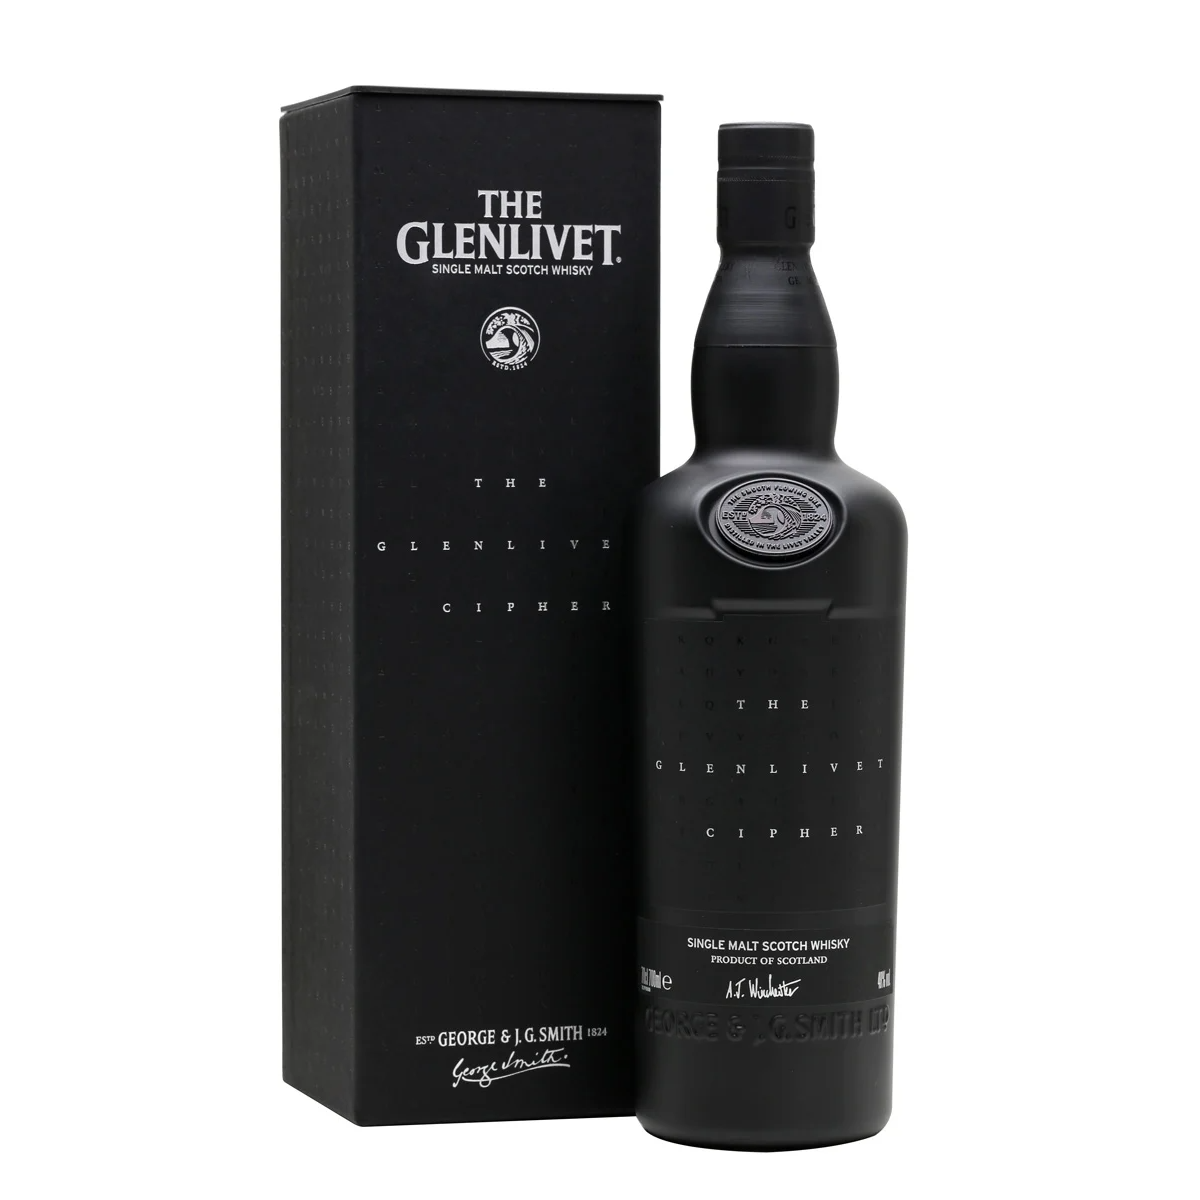 The Glenlivet Cipher Single Malt Scotch Whisky 700ml